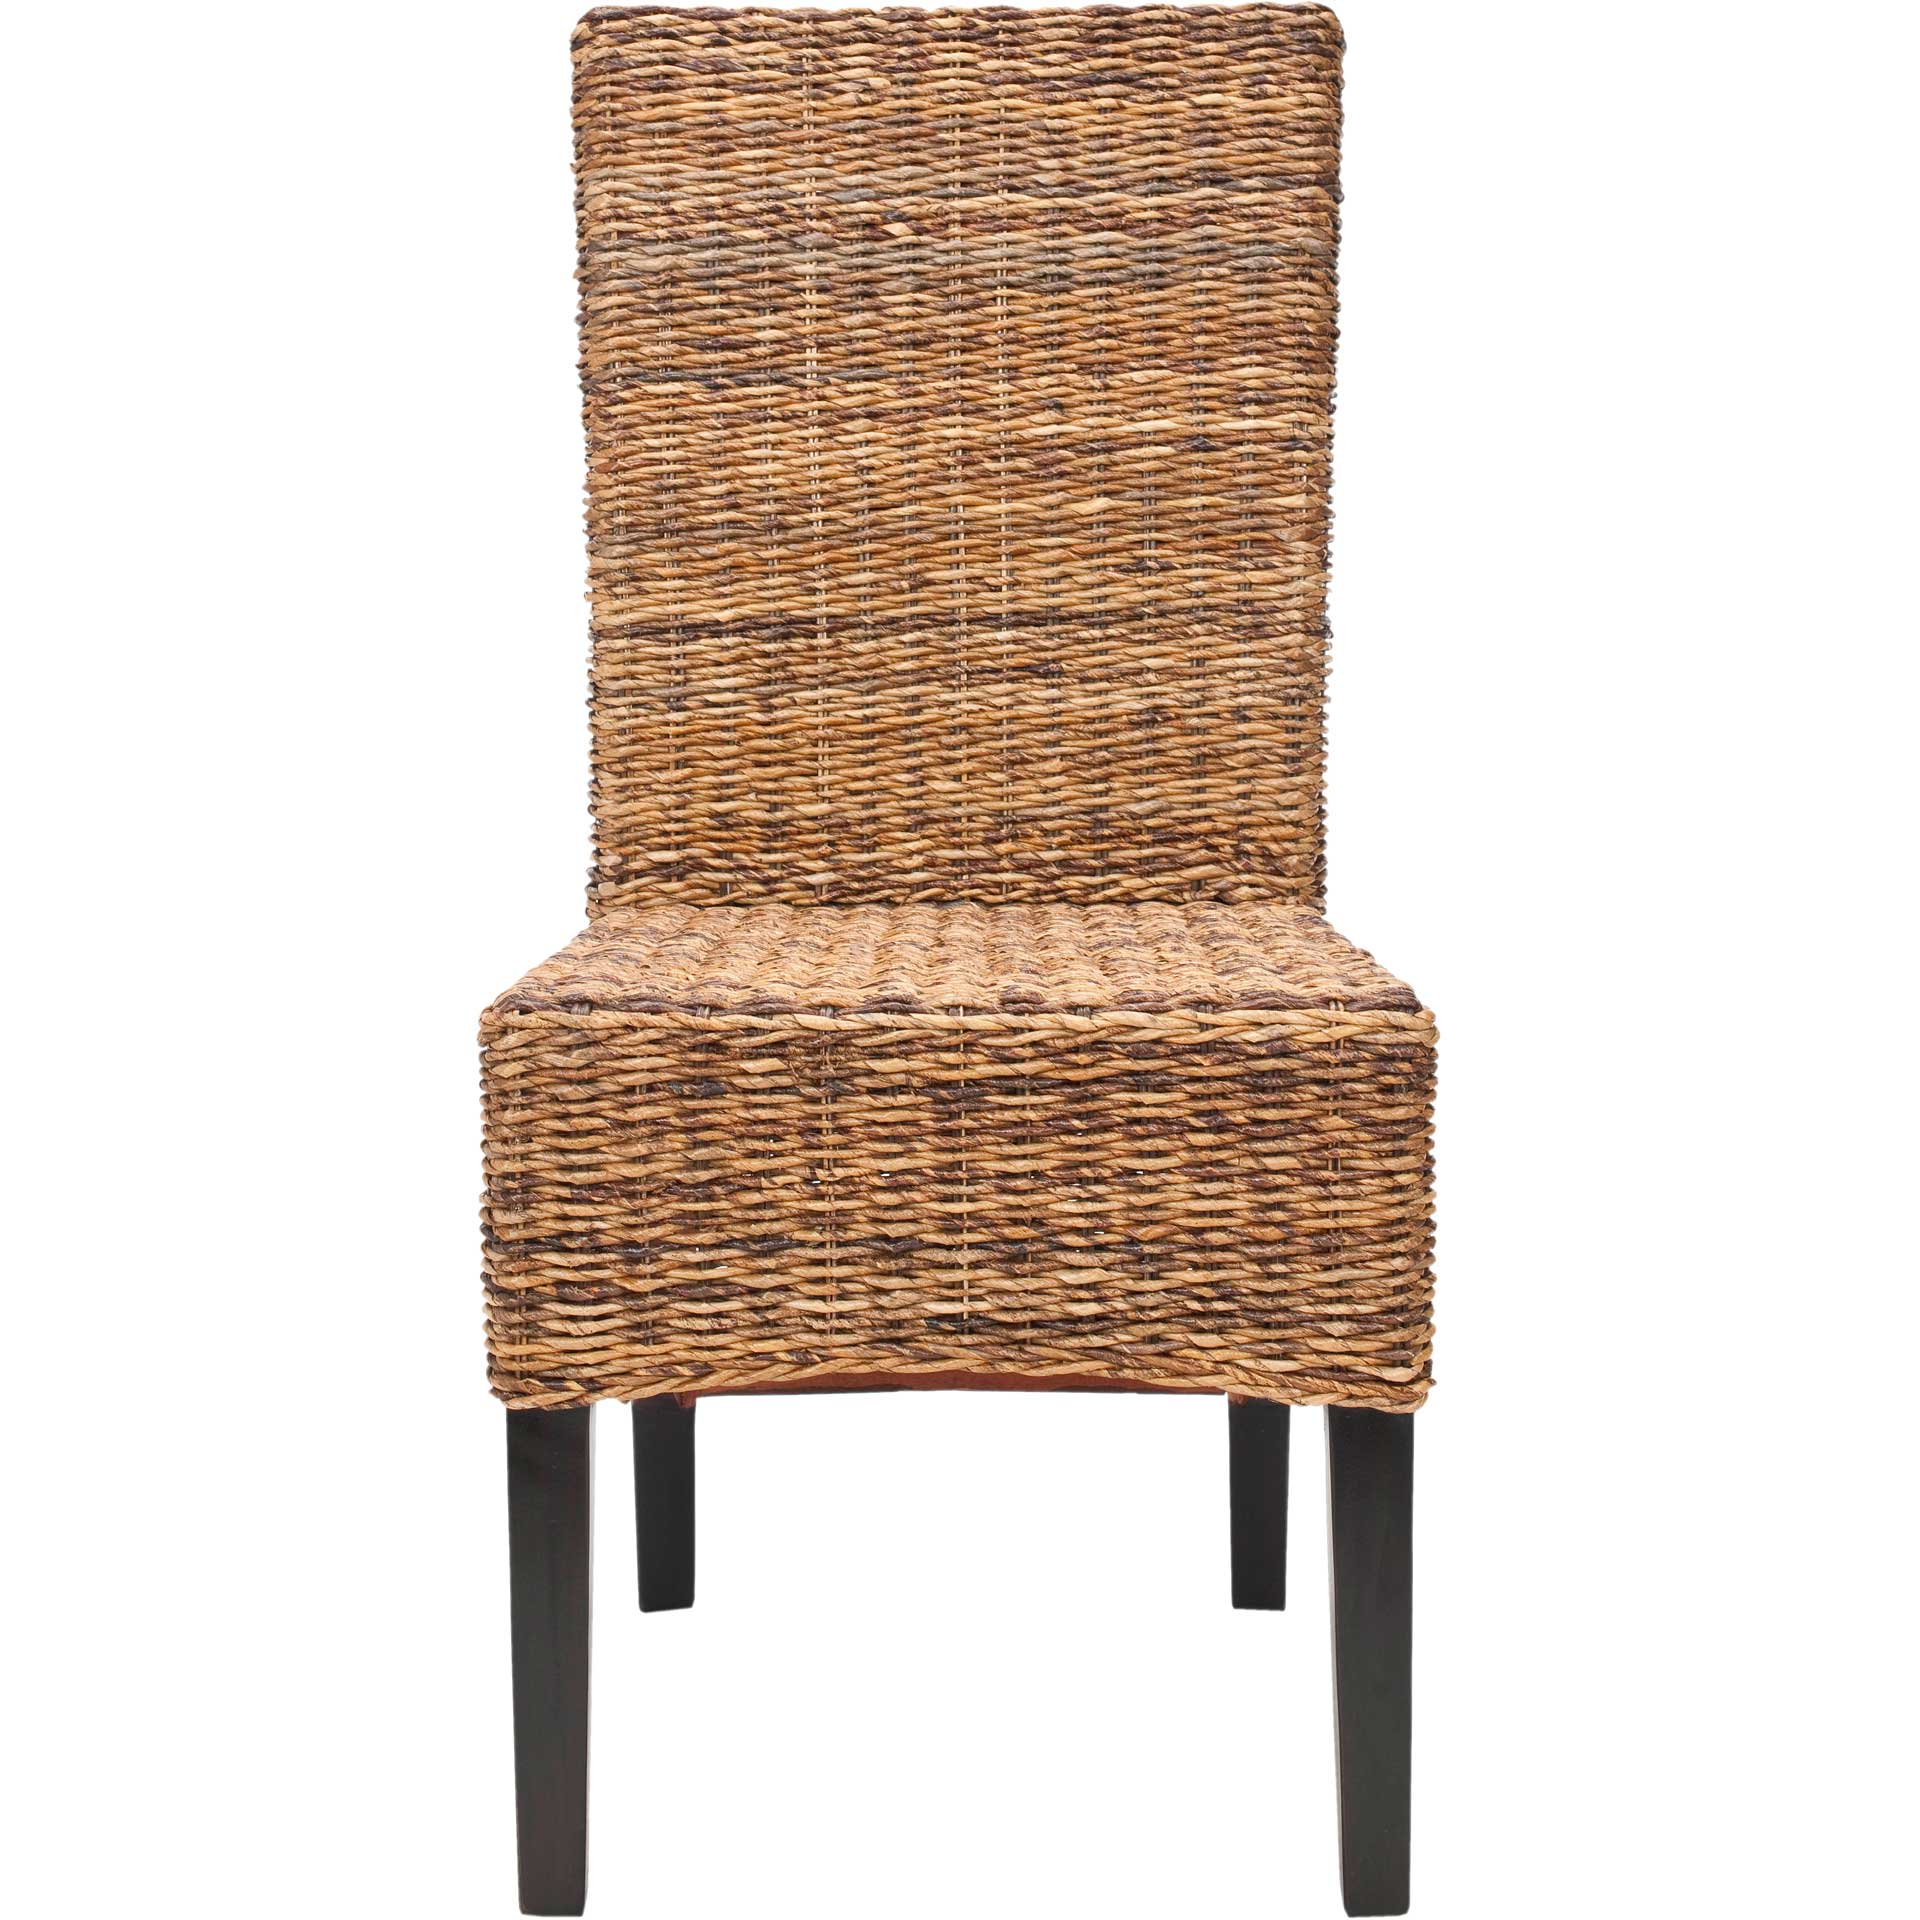 Simple Wicker Side Chair Brown/Colonial (Set of 2)